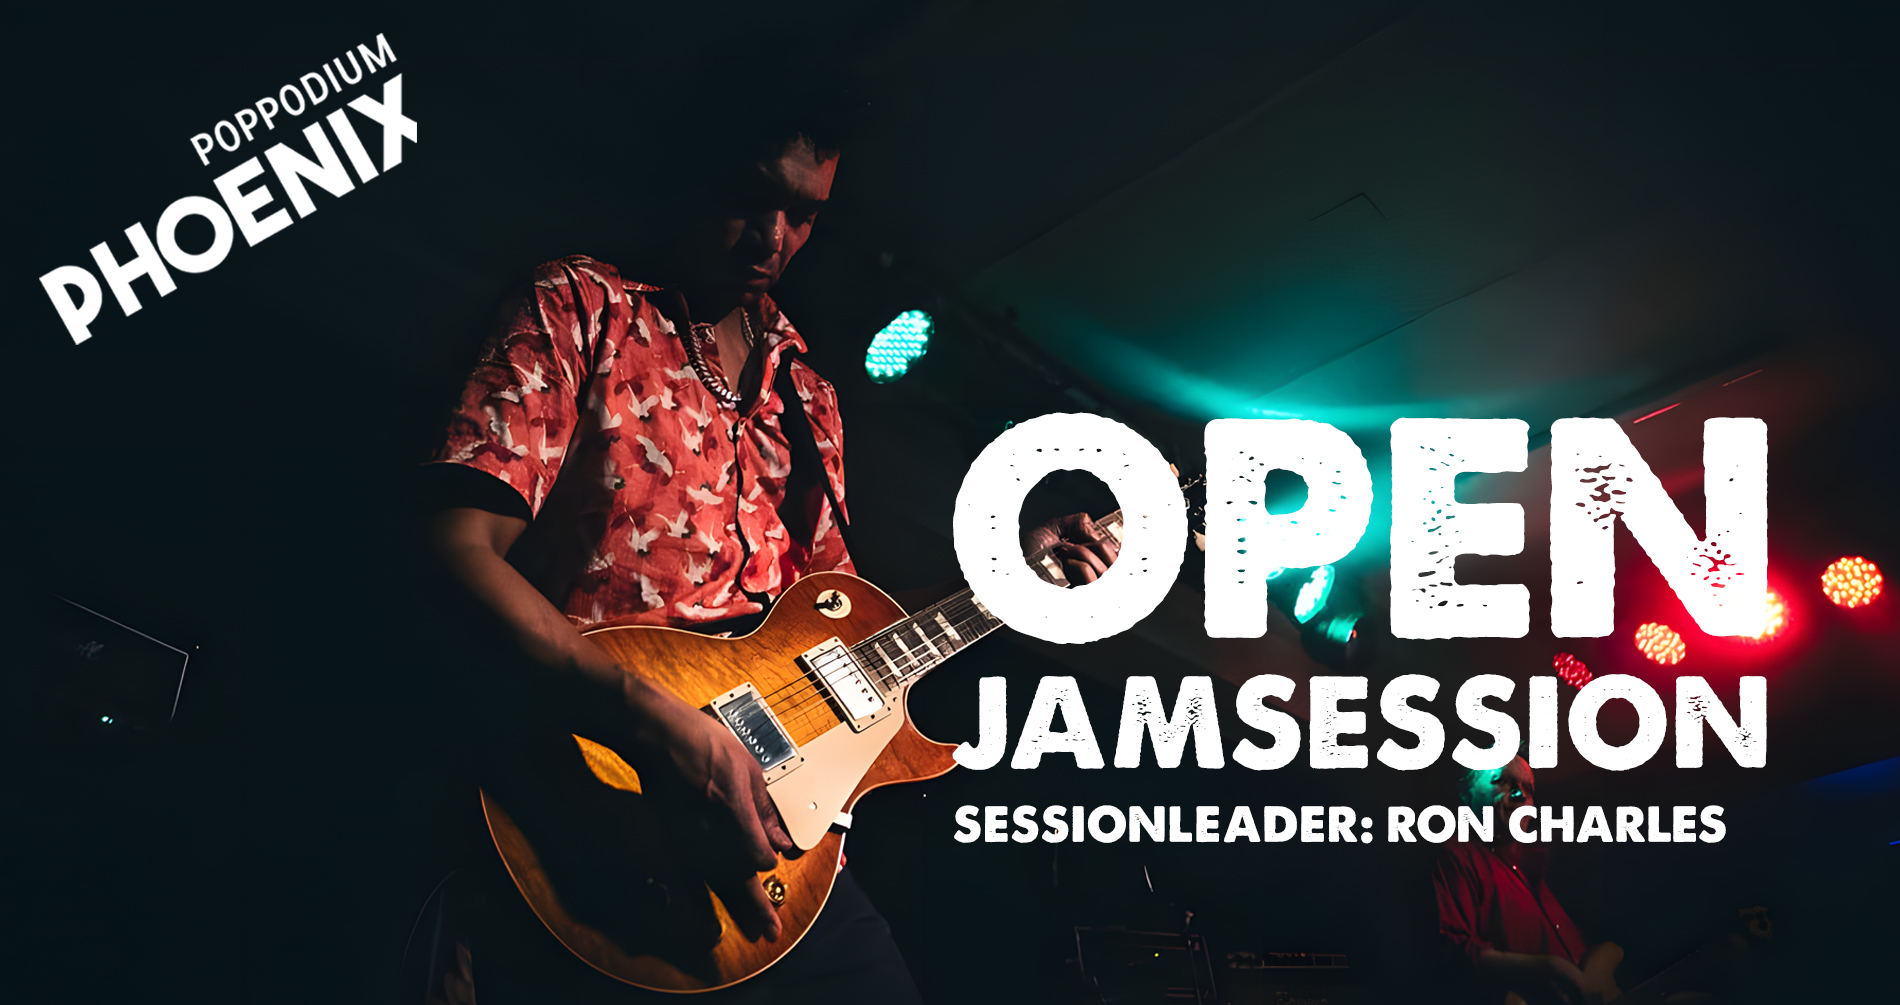 Sunday Jamsession (Sessionleader: Ron Charles!)